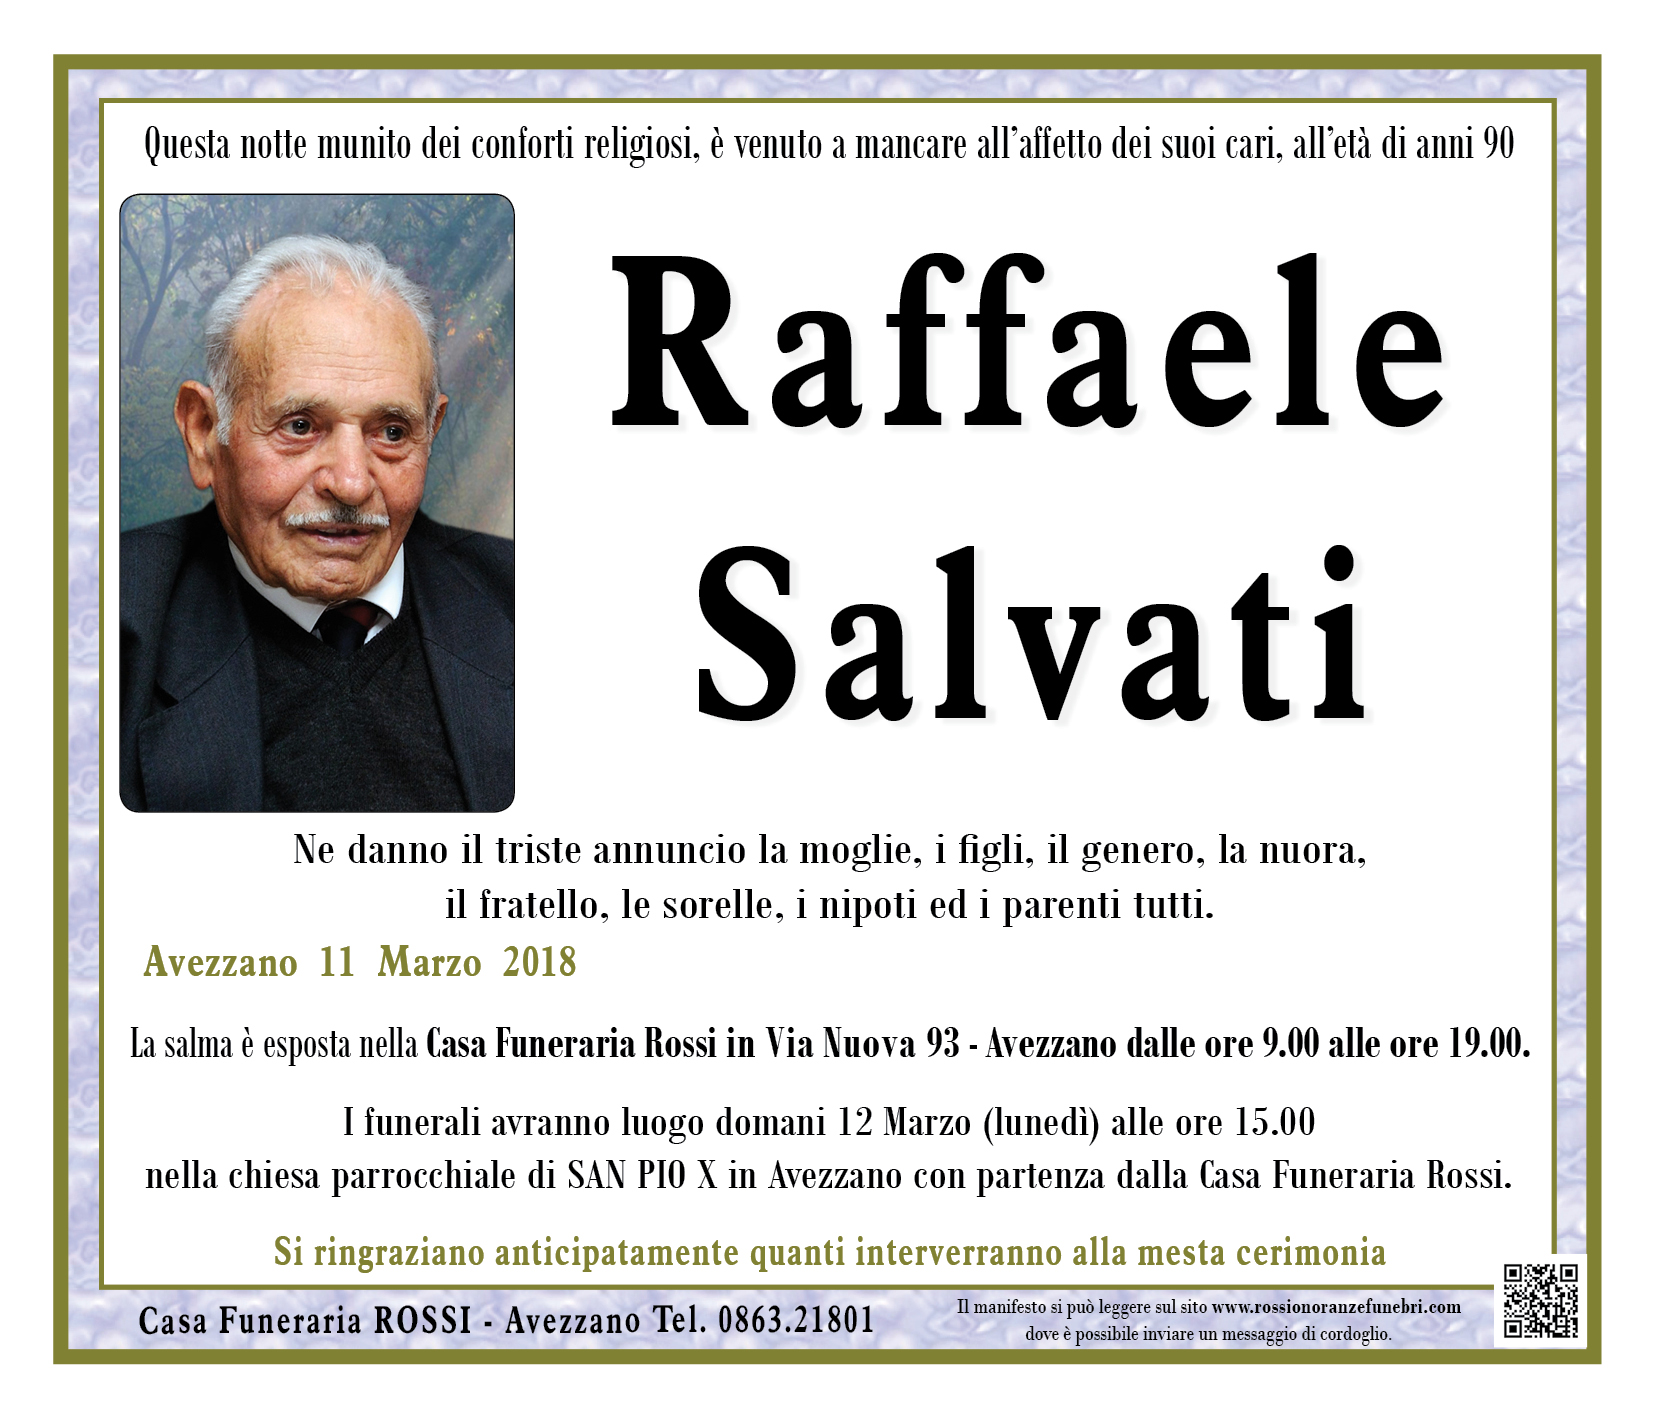 Raffaele Salvati